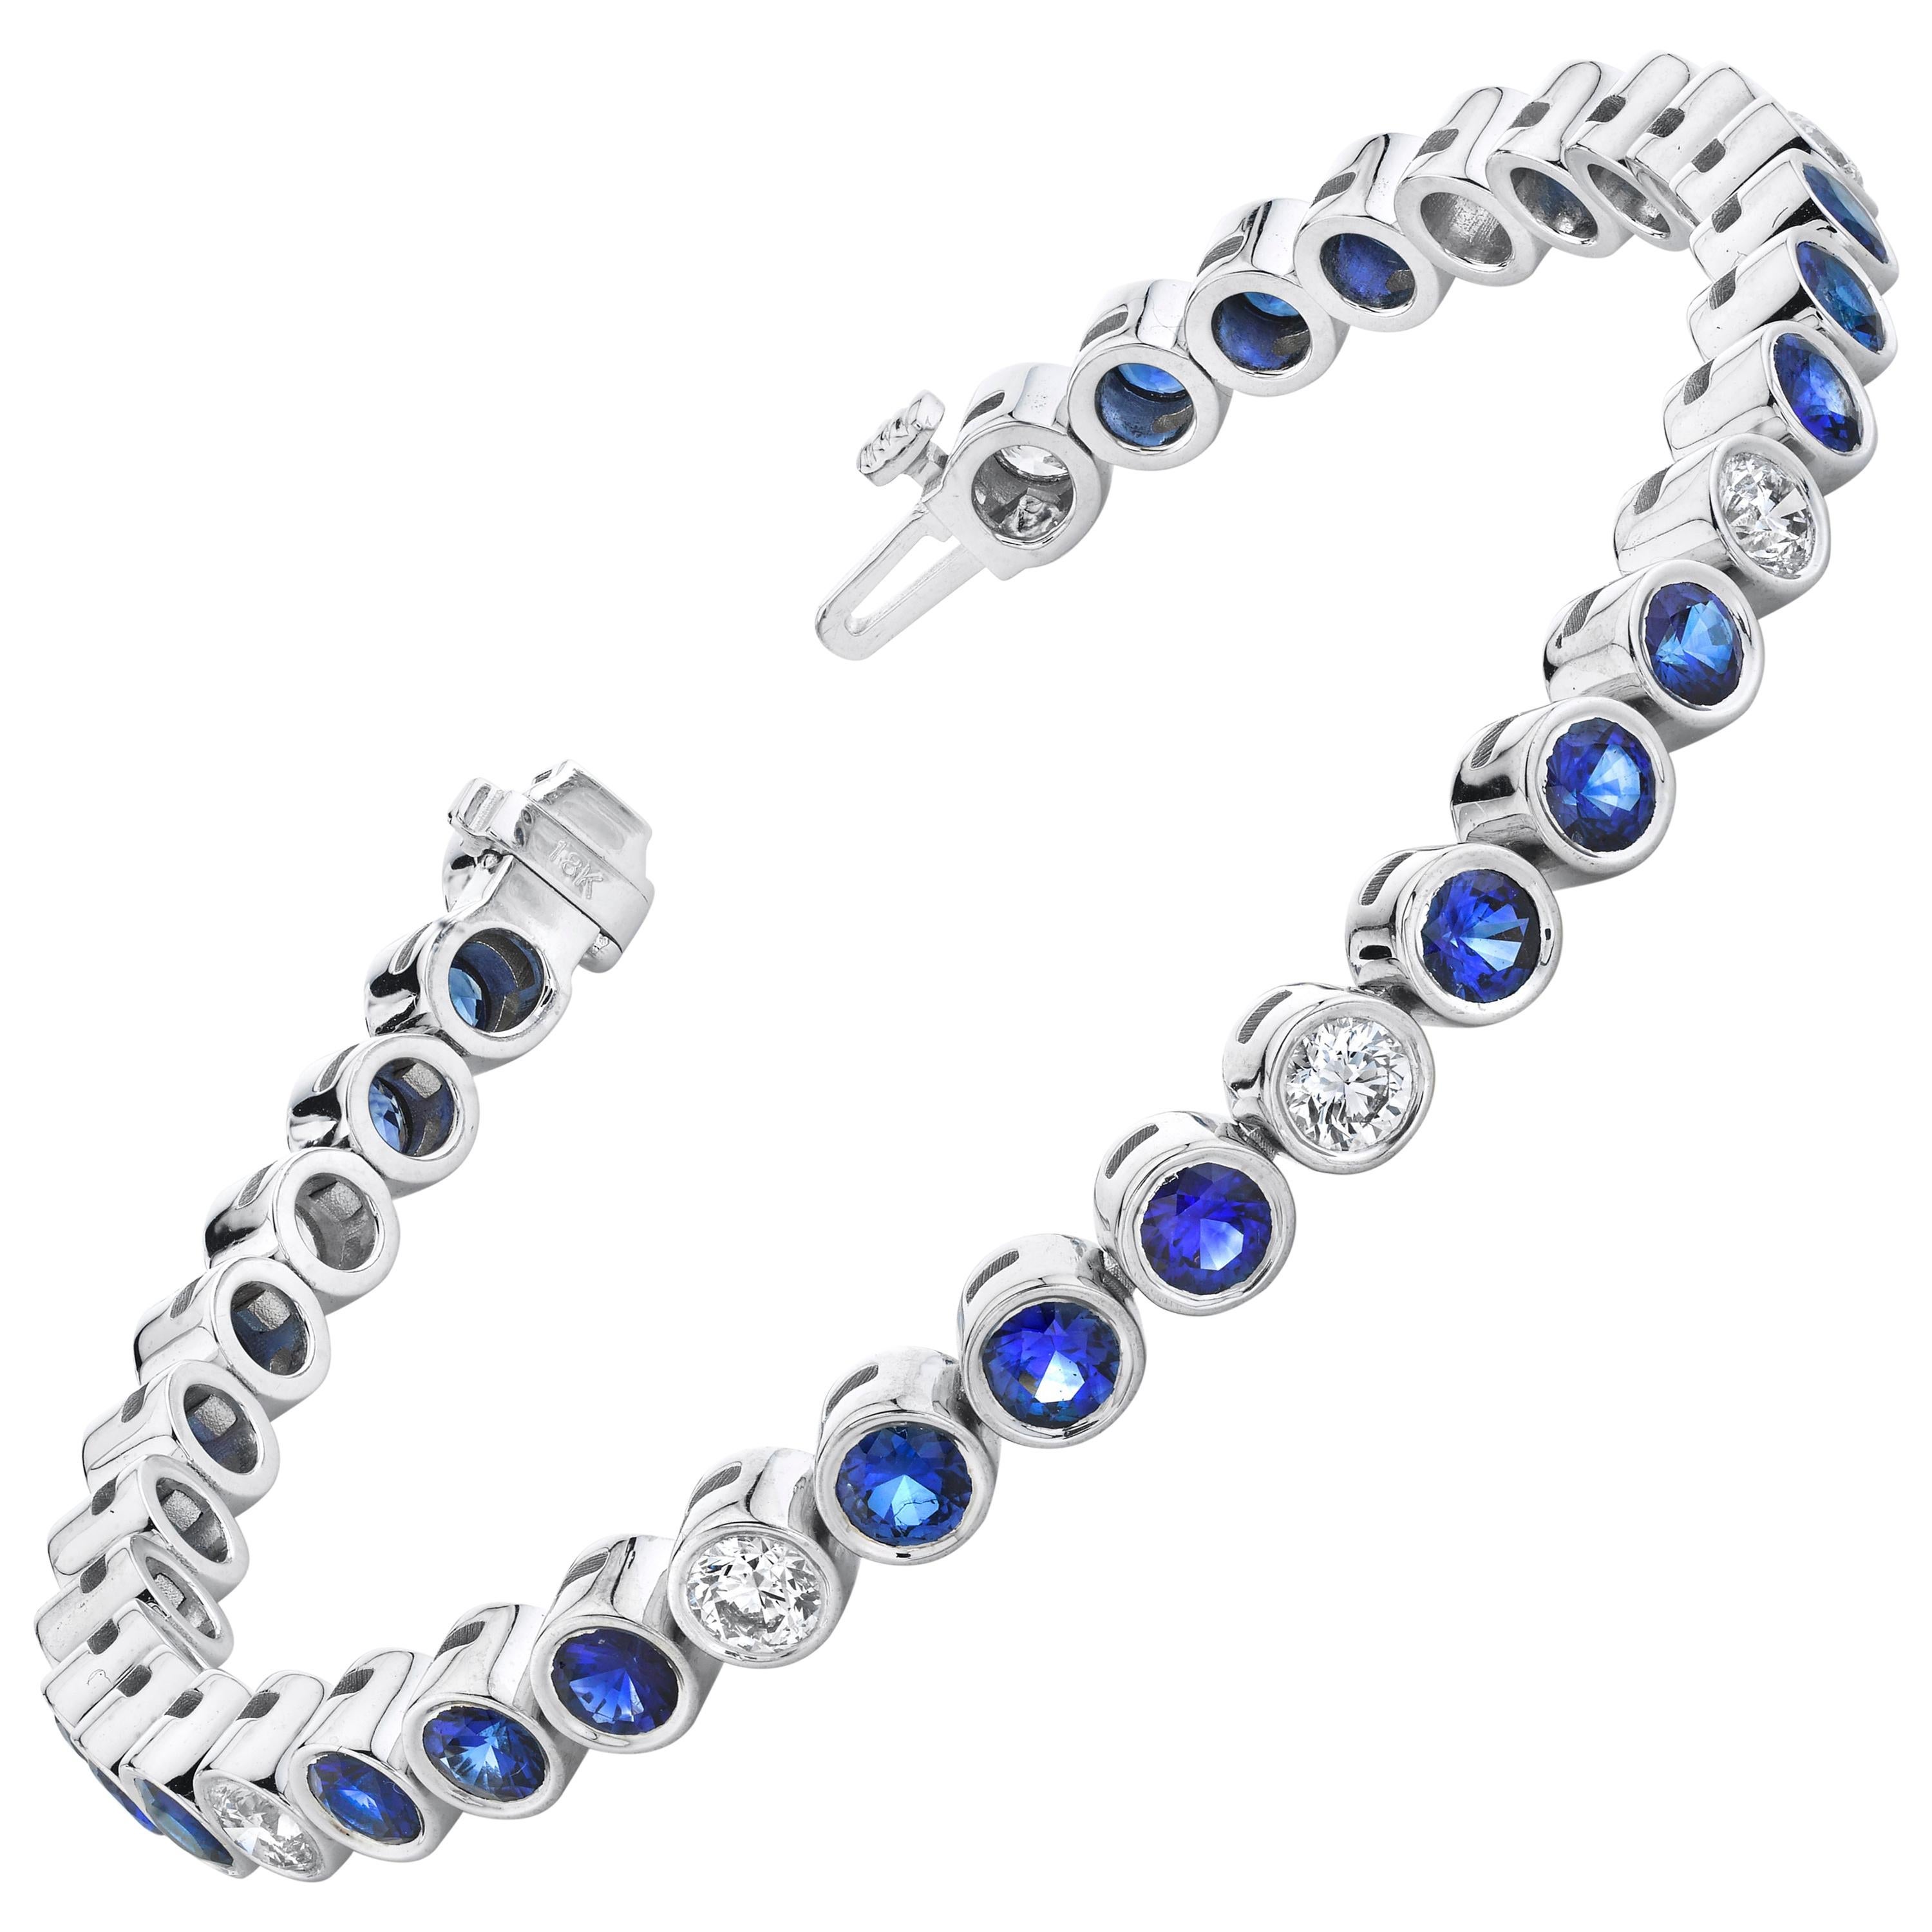 Blue Sapphire and Diamond Tennis Bracelet, White Gold Bezel, 6.42 Carats Total For Sale